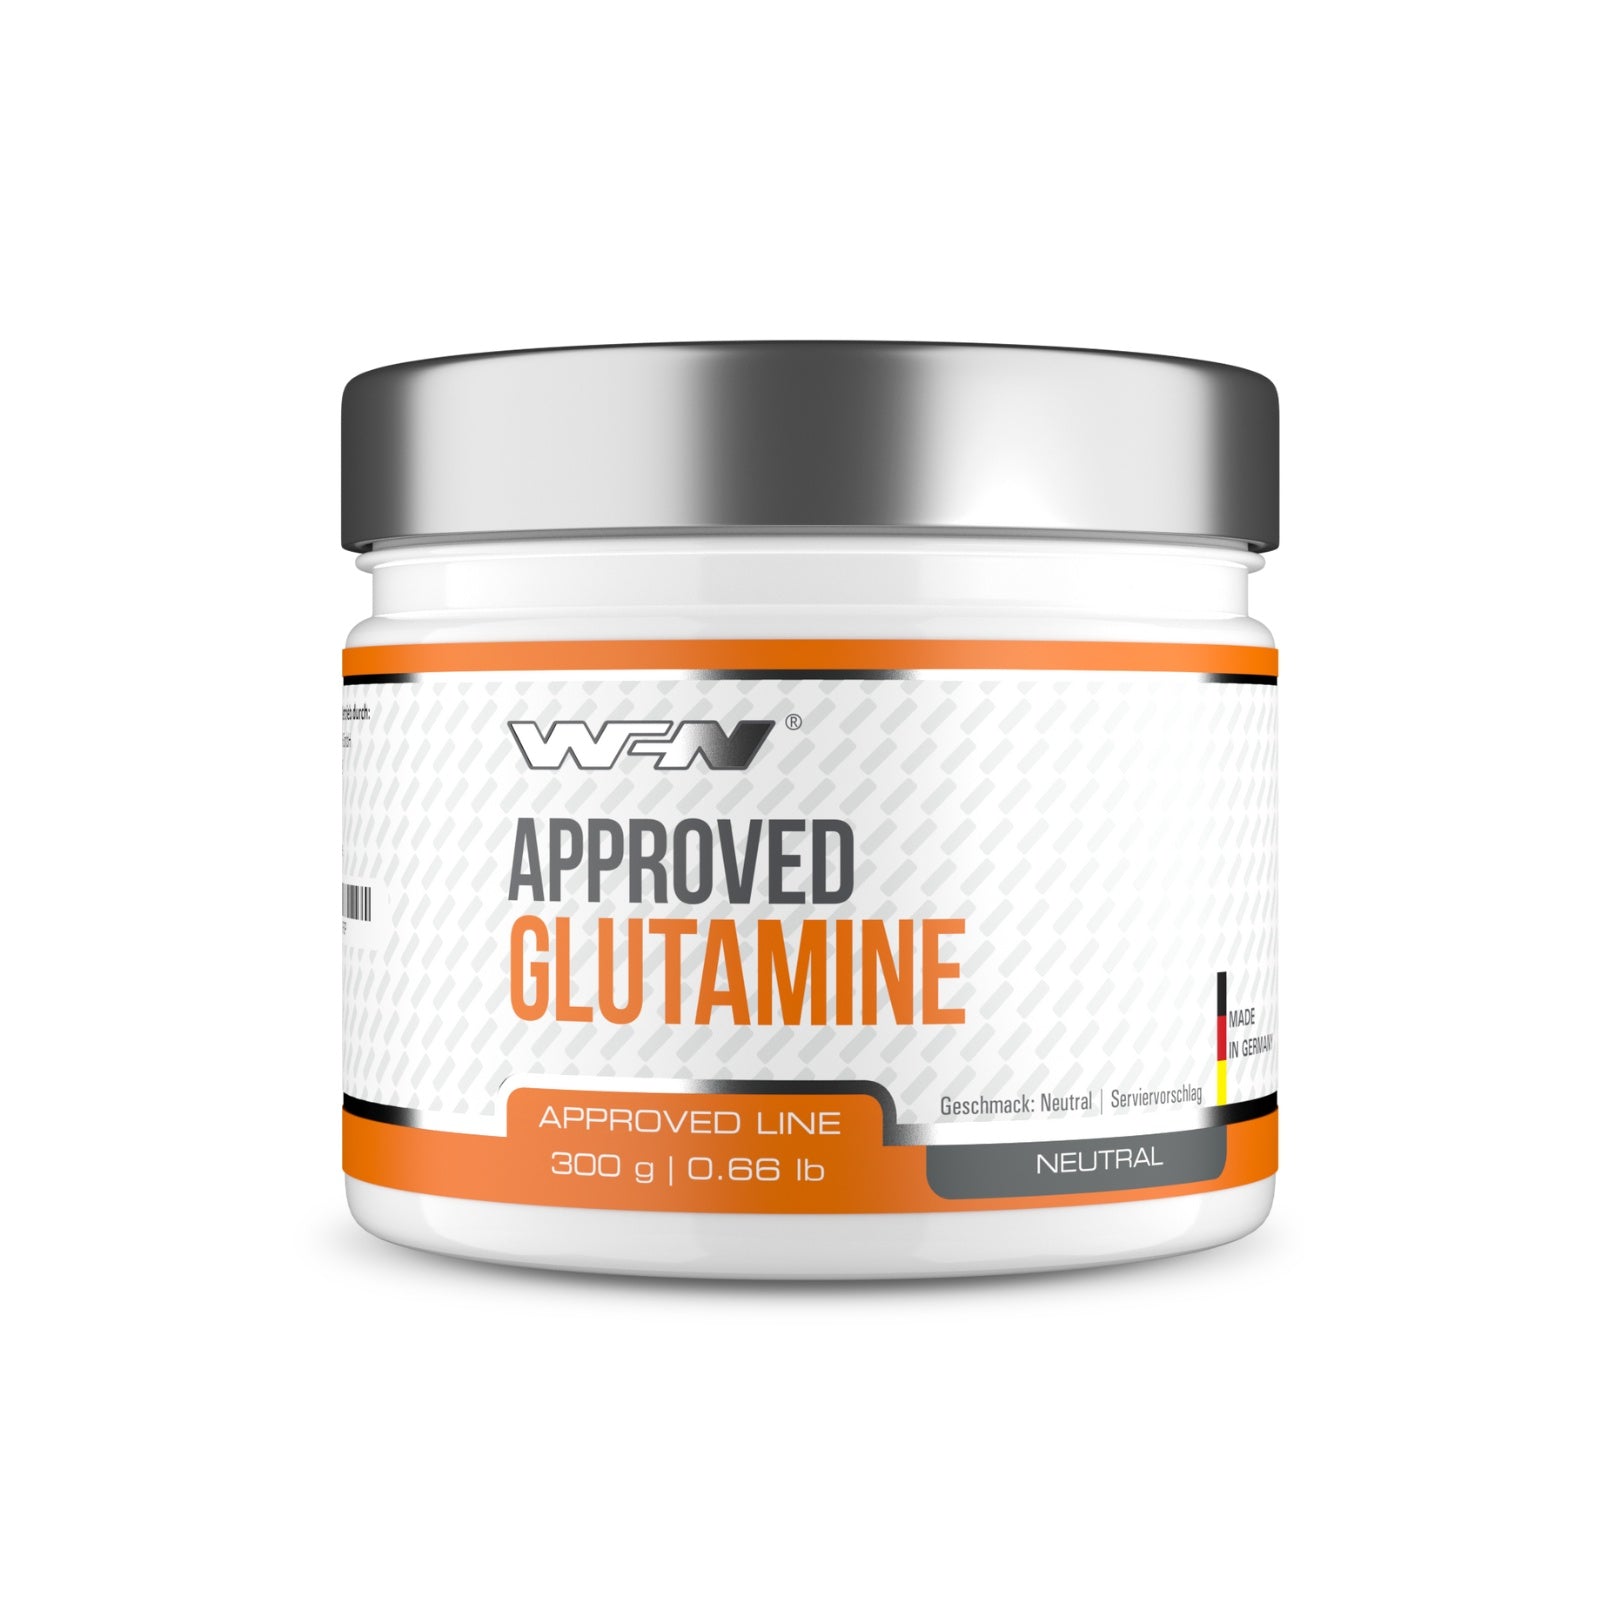 Approved Glutamine